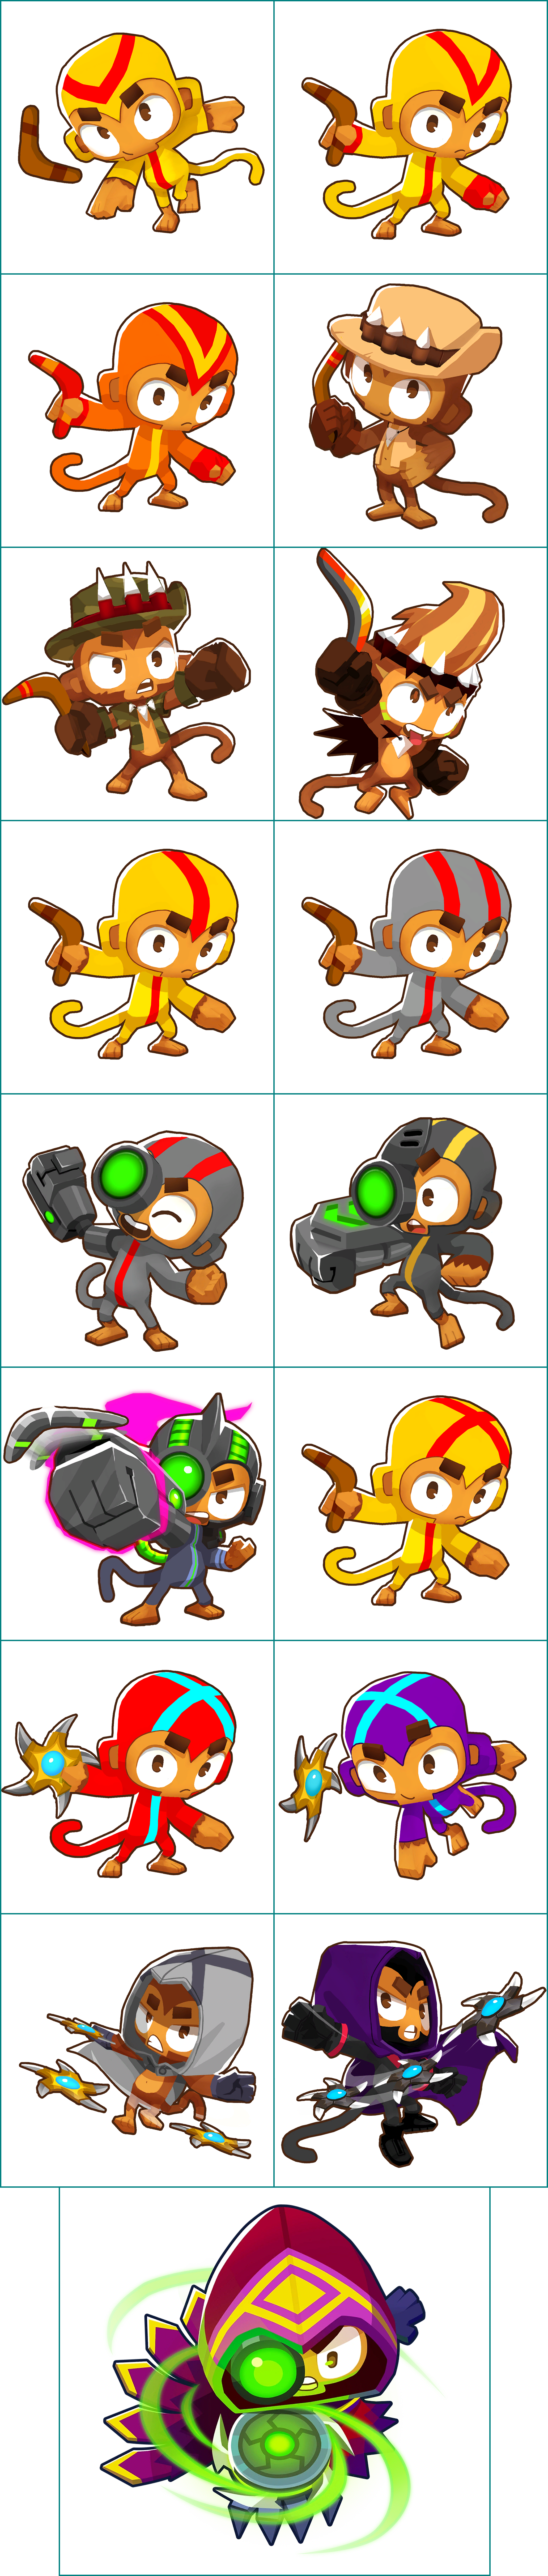 Bloons Tower Defense 6 - Boomerang Monkey